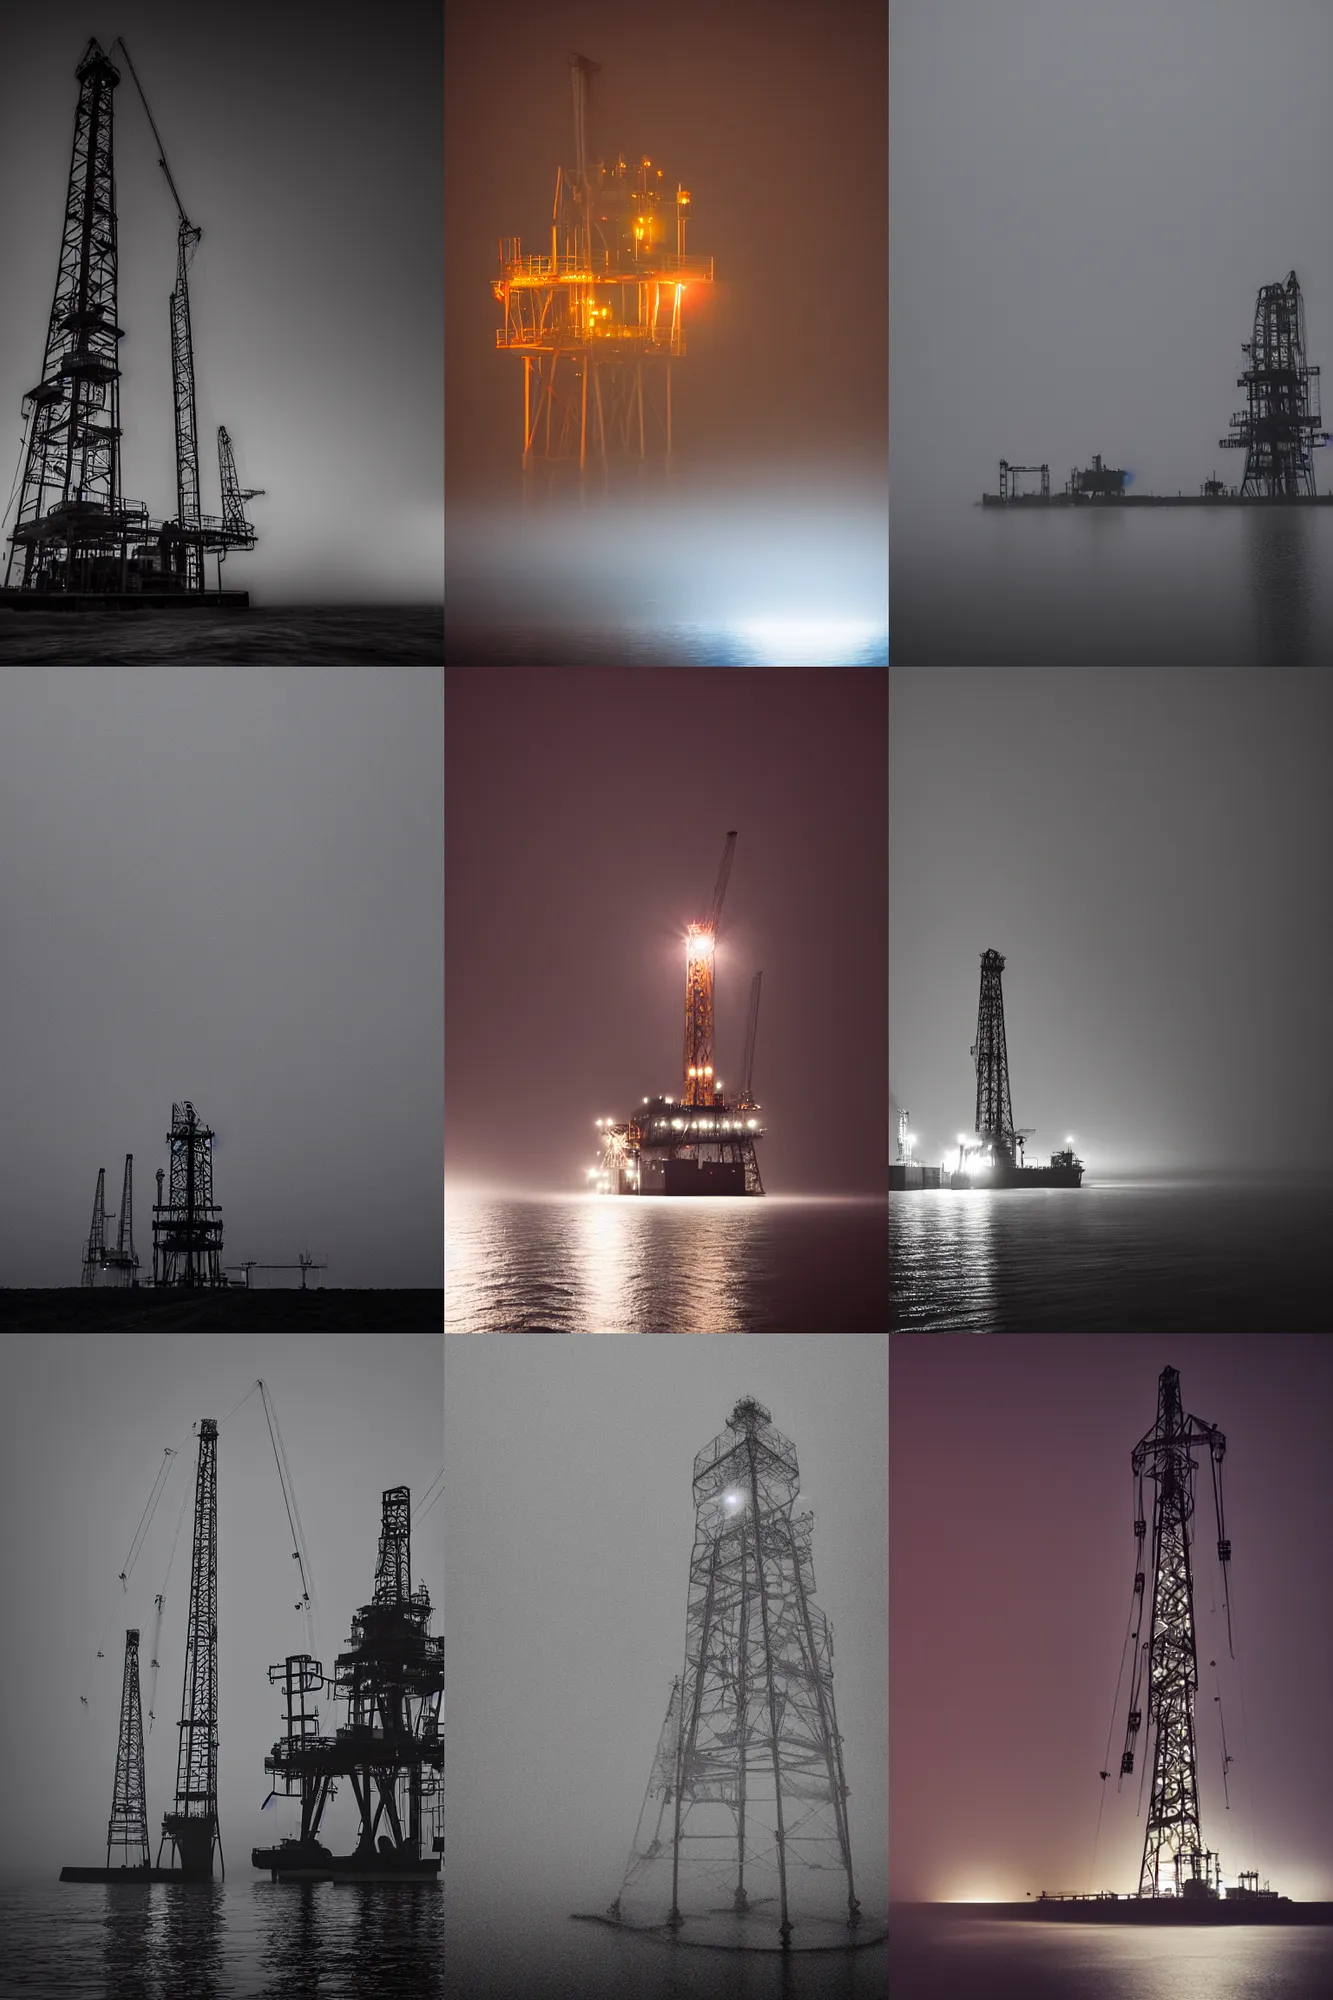 Prompt: oil rig, night, fog, award winning photography